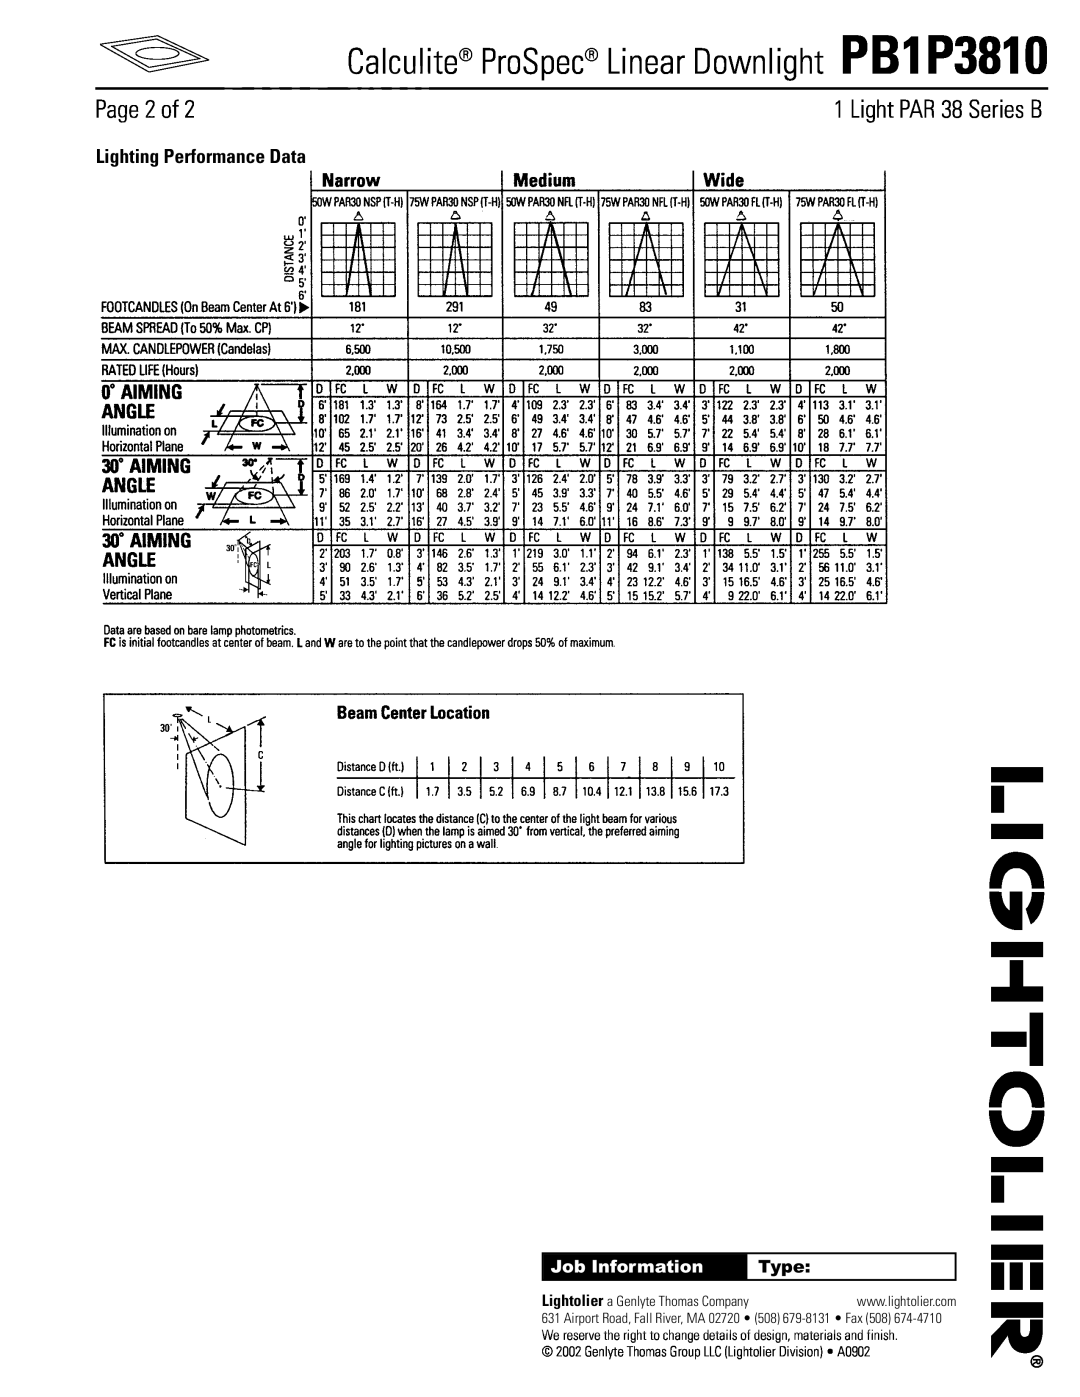 Lightolier Calculite ProSpec Linear Downlight PB1P3810, Page 2 of 2 PB1P3810, Light PAR 38 Series B, Job Information 